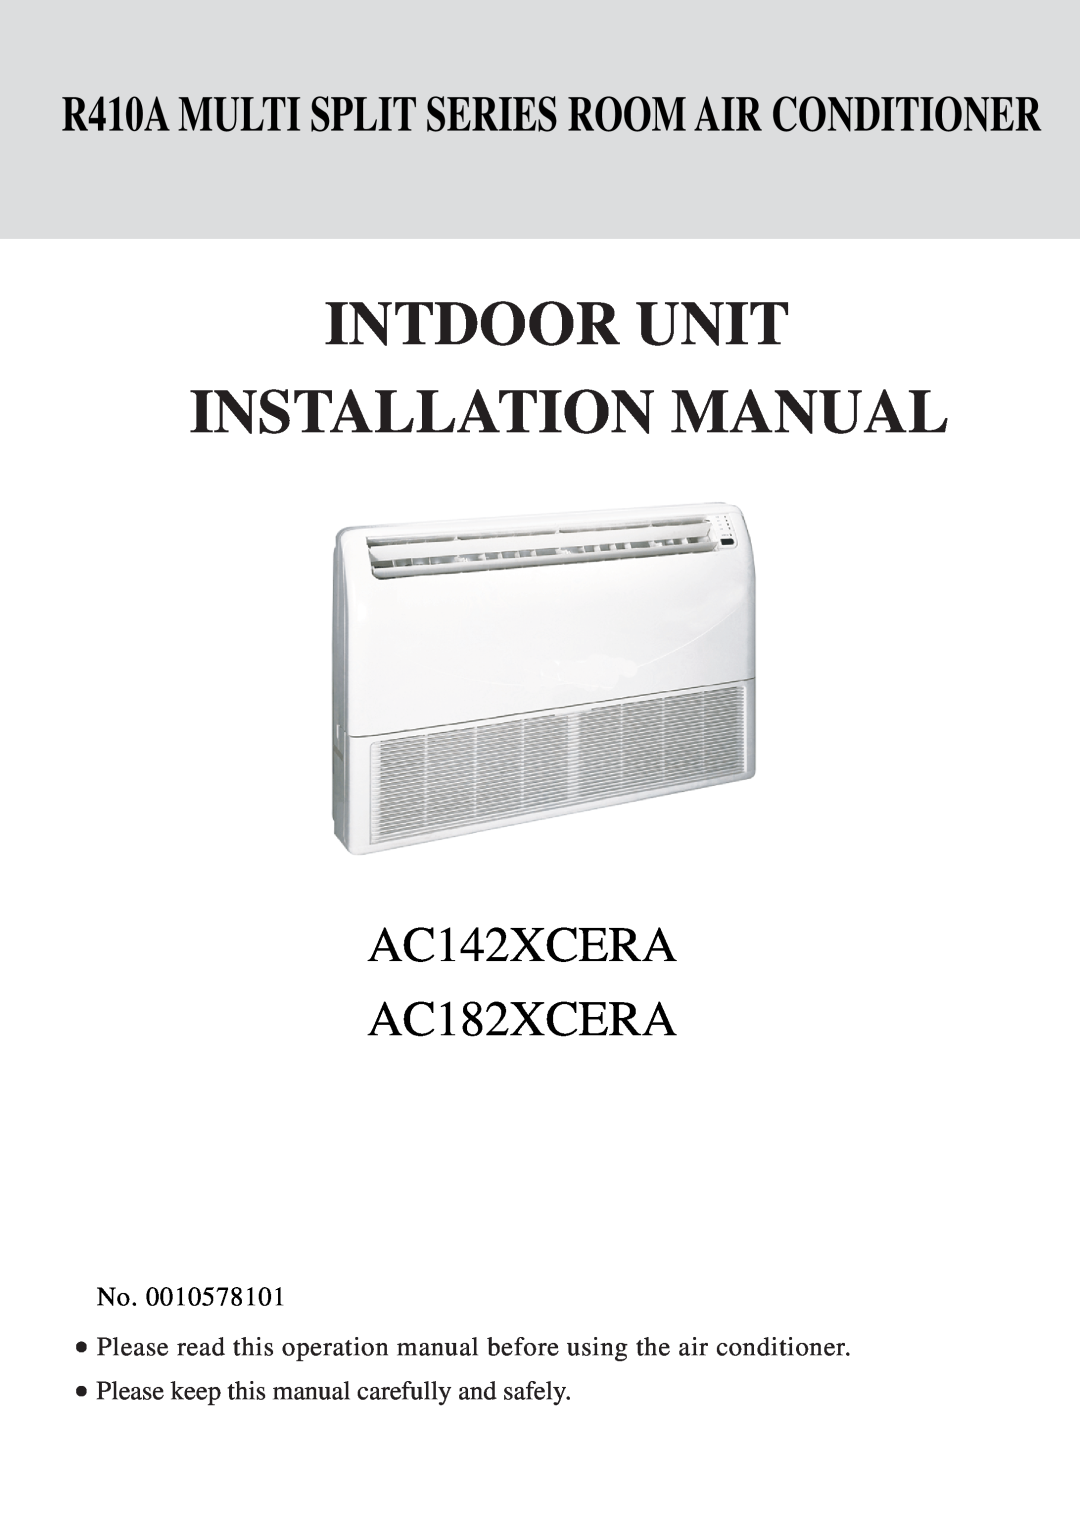 Haier operation manual Intdoor Unit Installation Manual, AC142XCERA AC182XCERA 